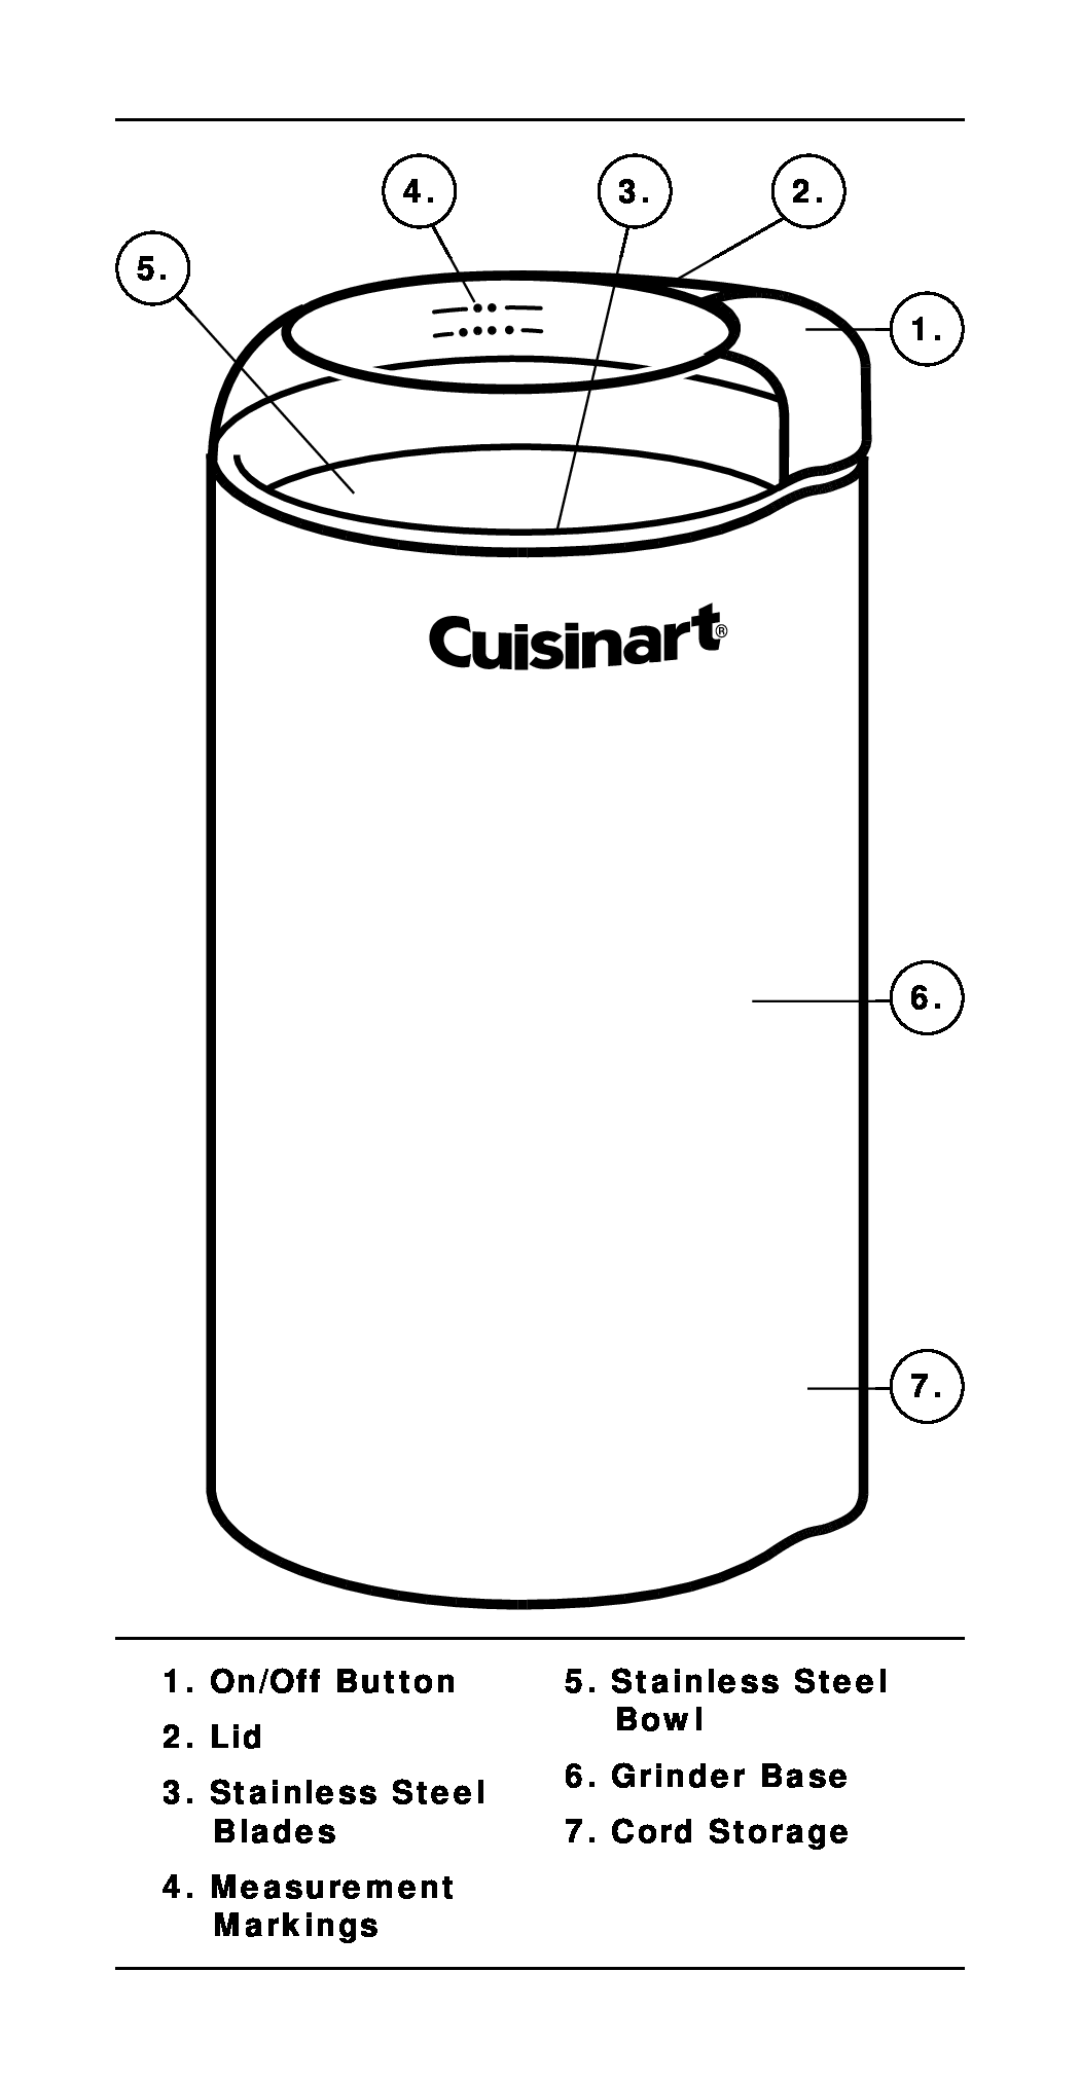 Cuisinart DCG-20BKN manual 1. On/Off Button 2. Lid 3. Stainless Steel Blades, Measurement Markings 